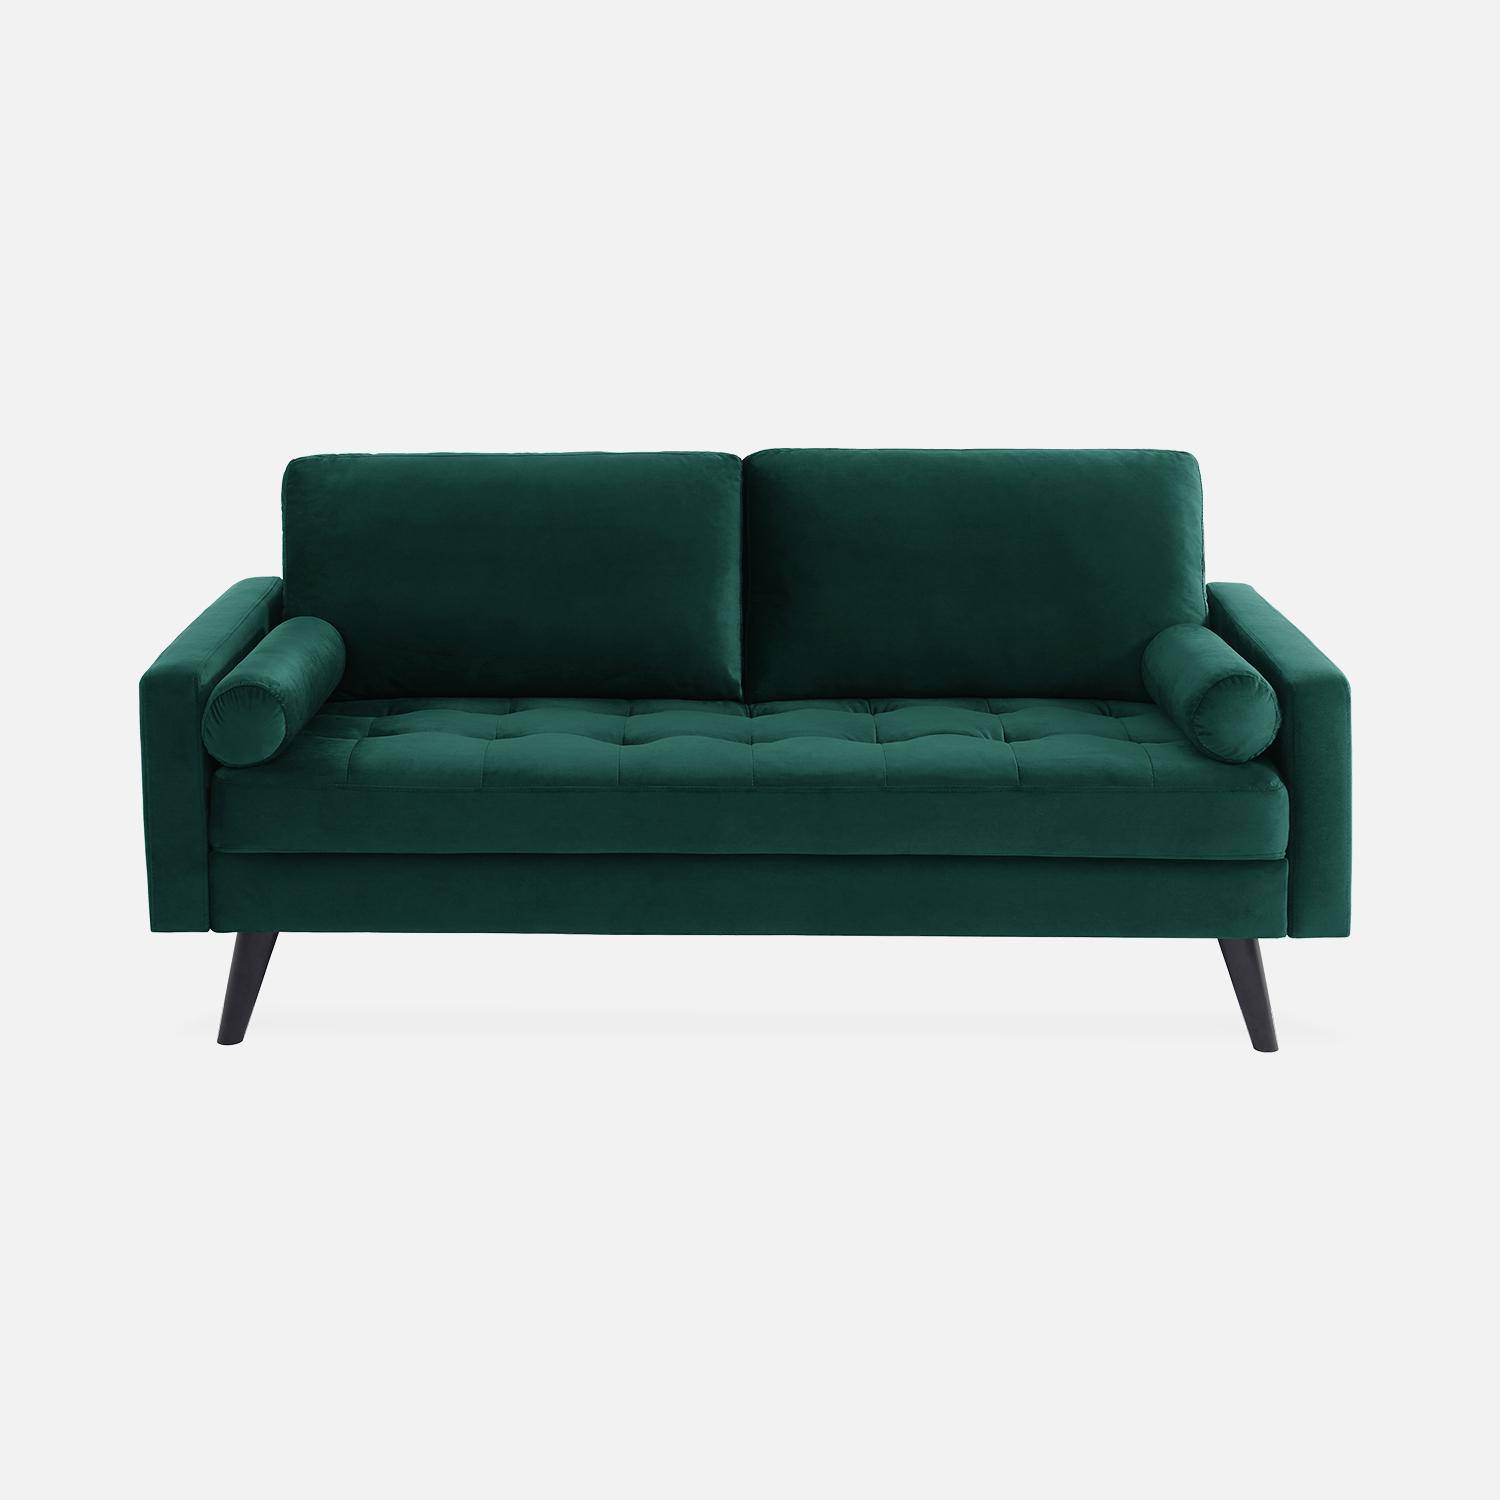 Velvet vintage style 3-seater sofa with Scandi style wooden legs - Ivar - Green Photo3